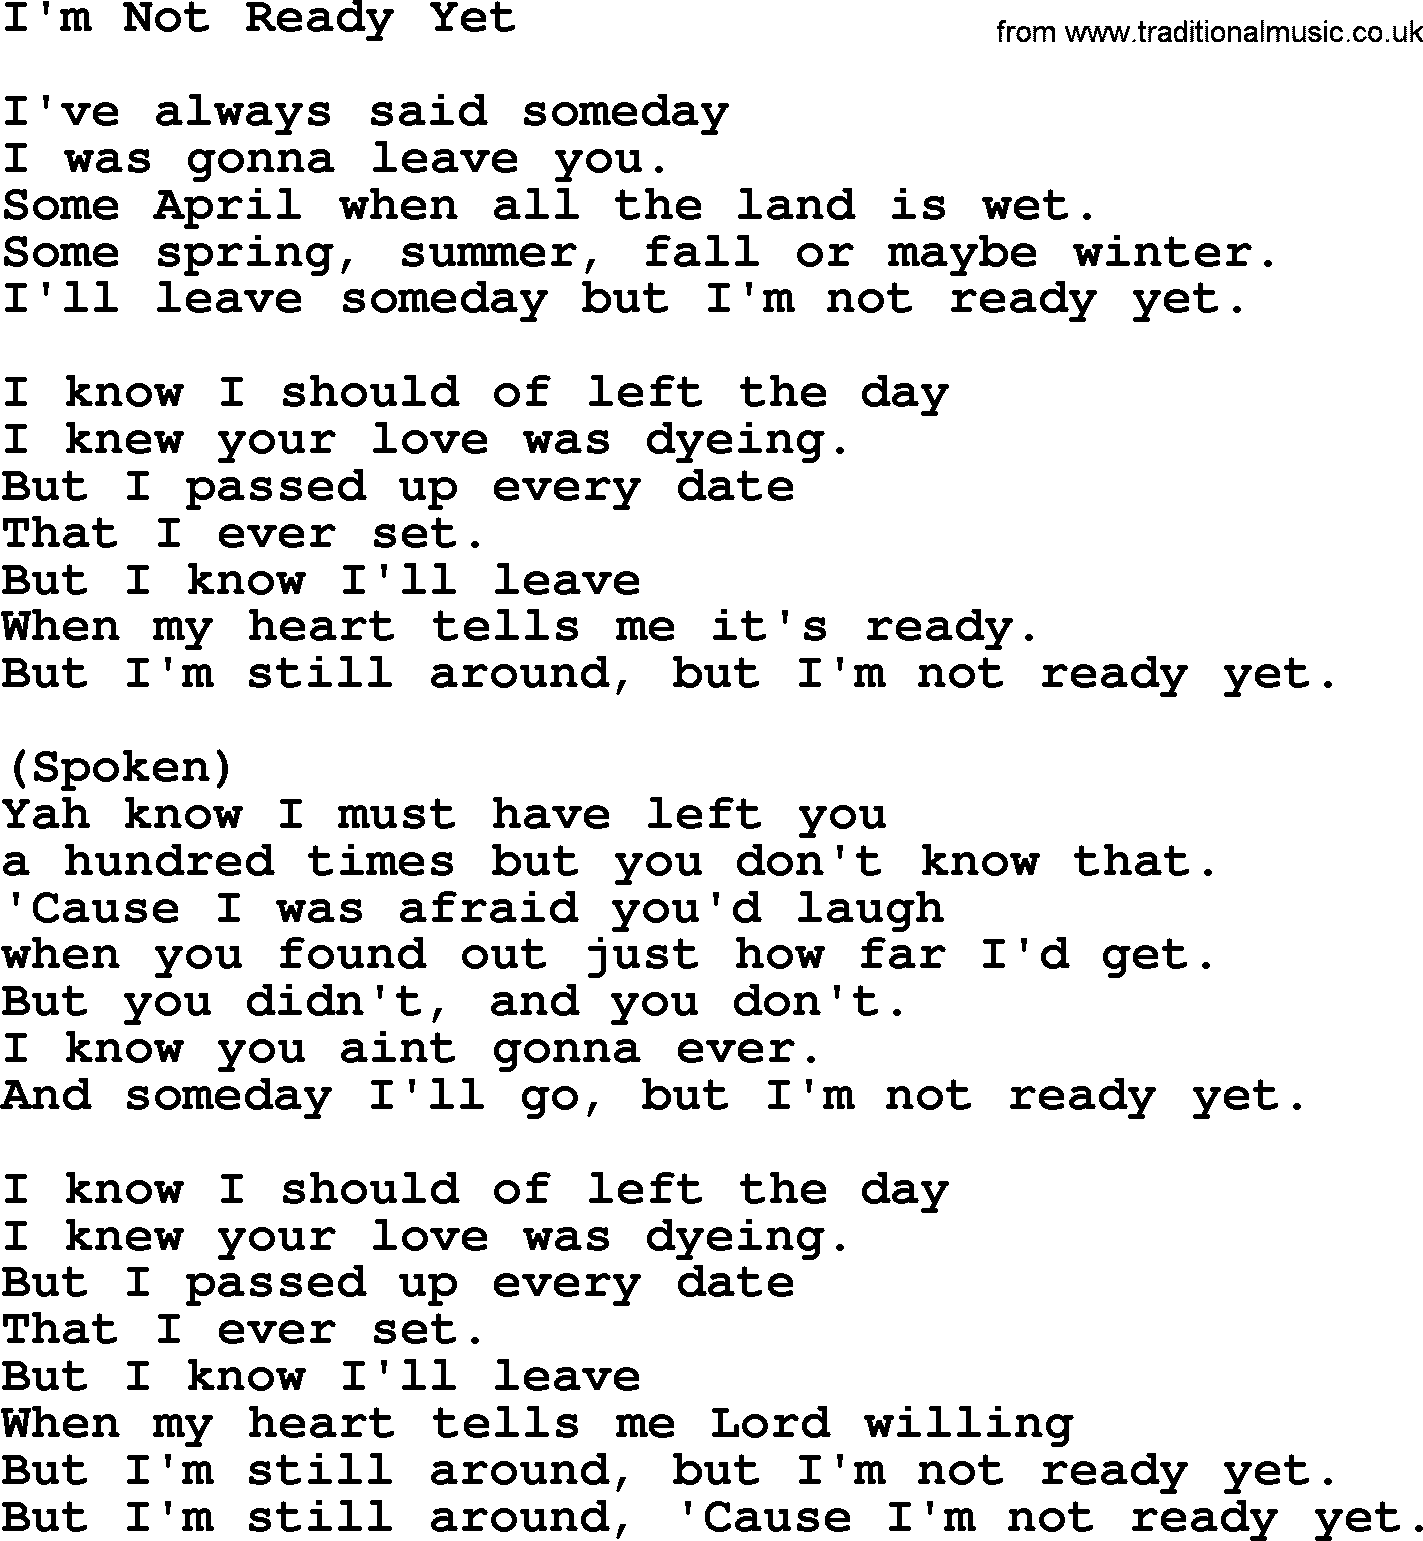 George Jones song: I'm Not Ready Yet, lyrics